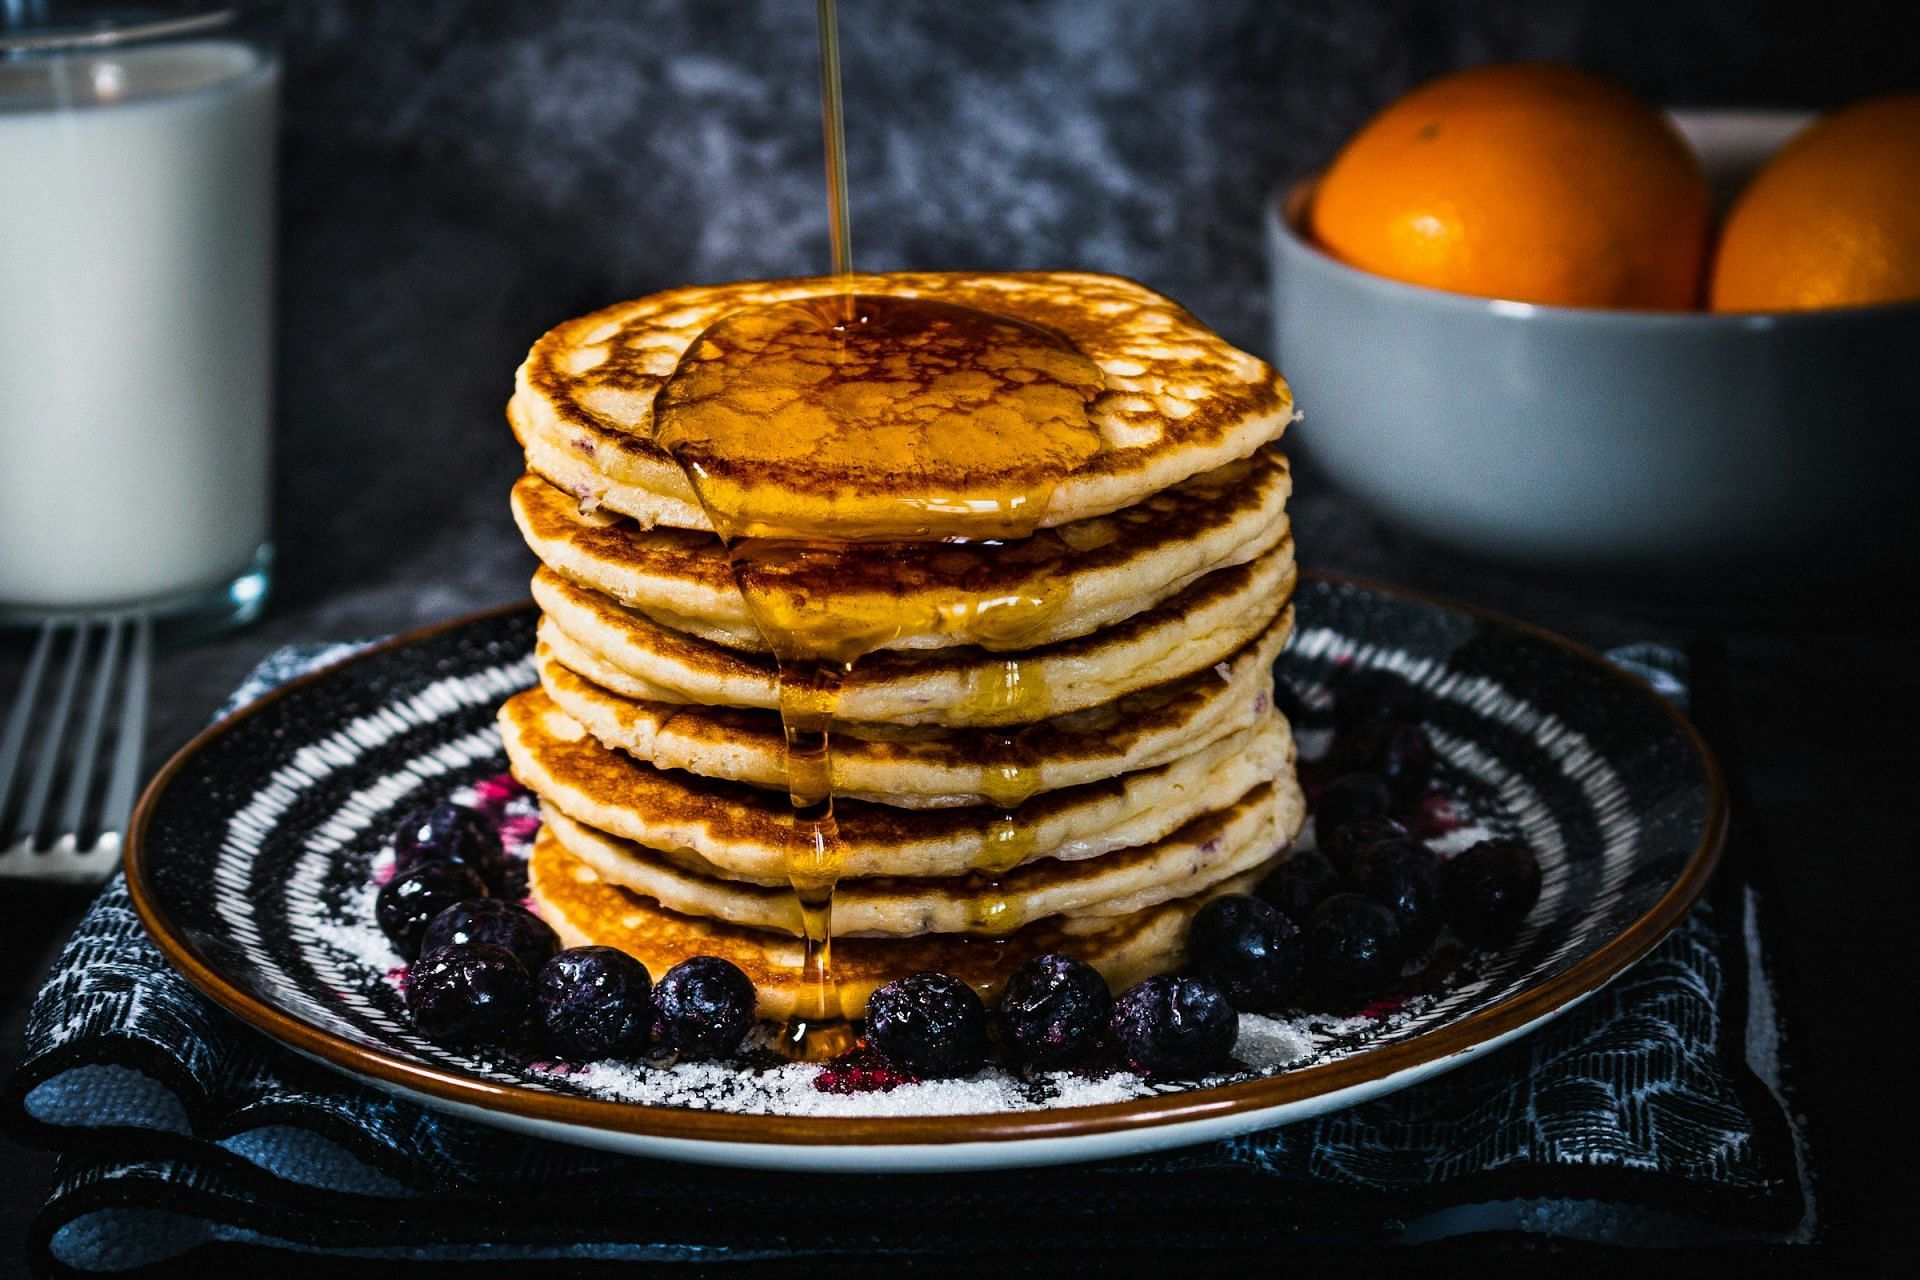 Pancakes come under high-sodium foods (image by Sultan Abdulrazzaq/Unsplash)